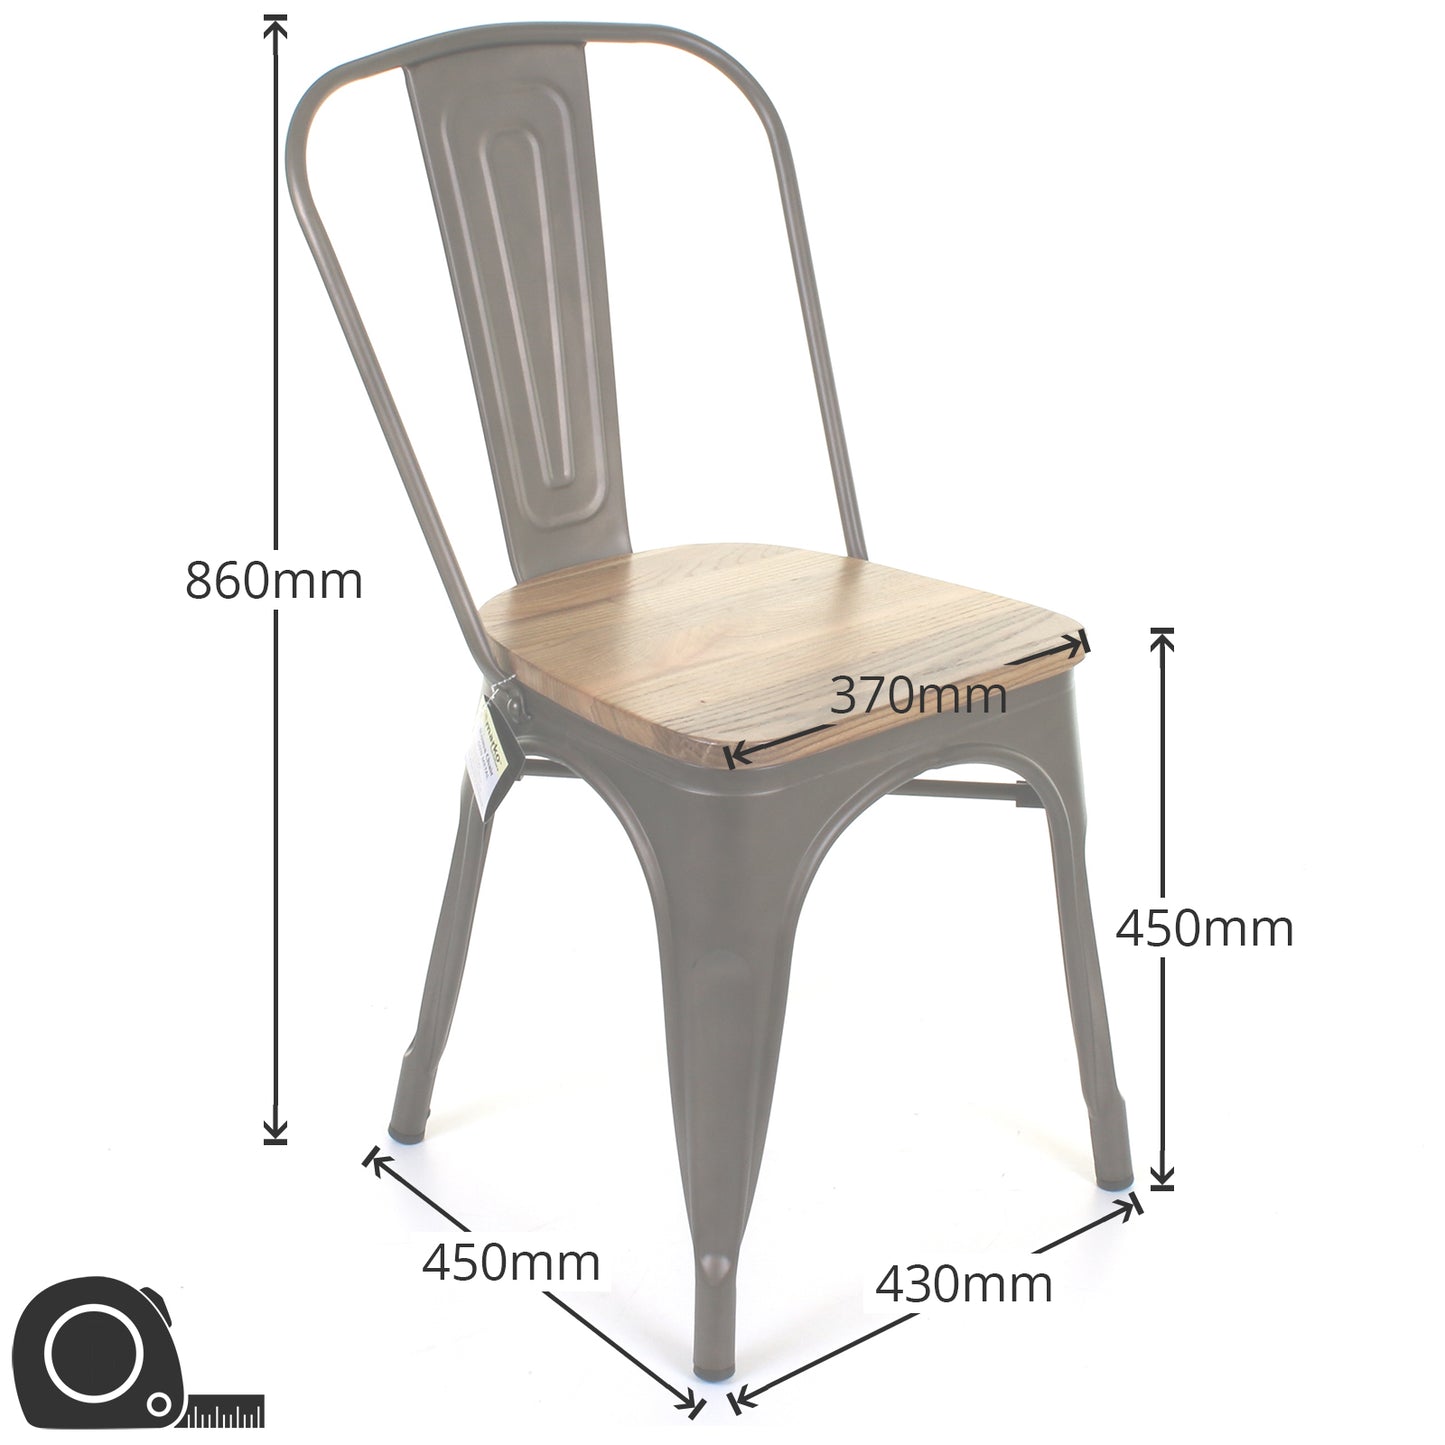 3PC Enna Table & Palermo Chair Set - Gun Metal Grey